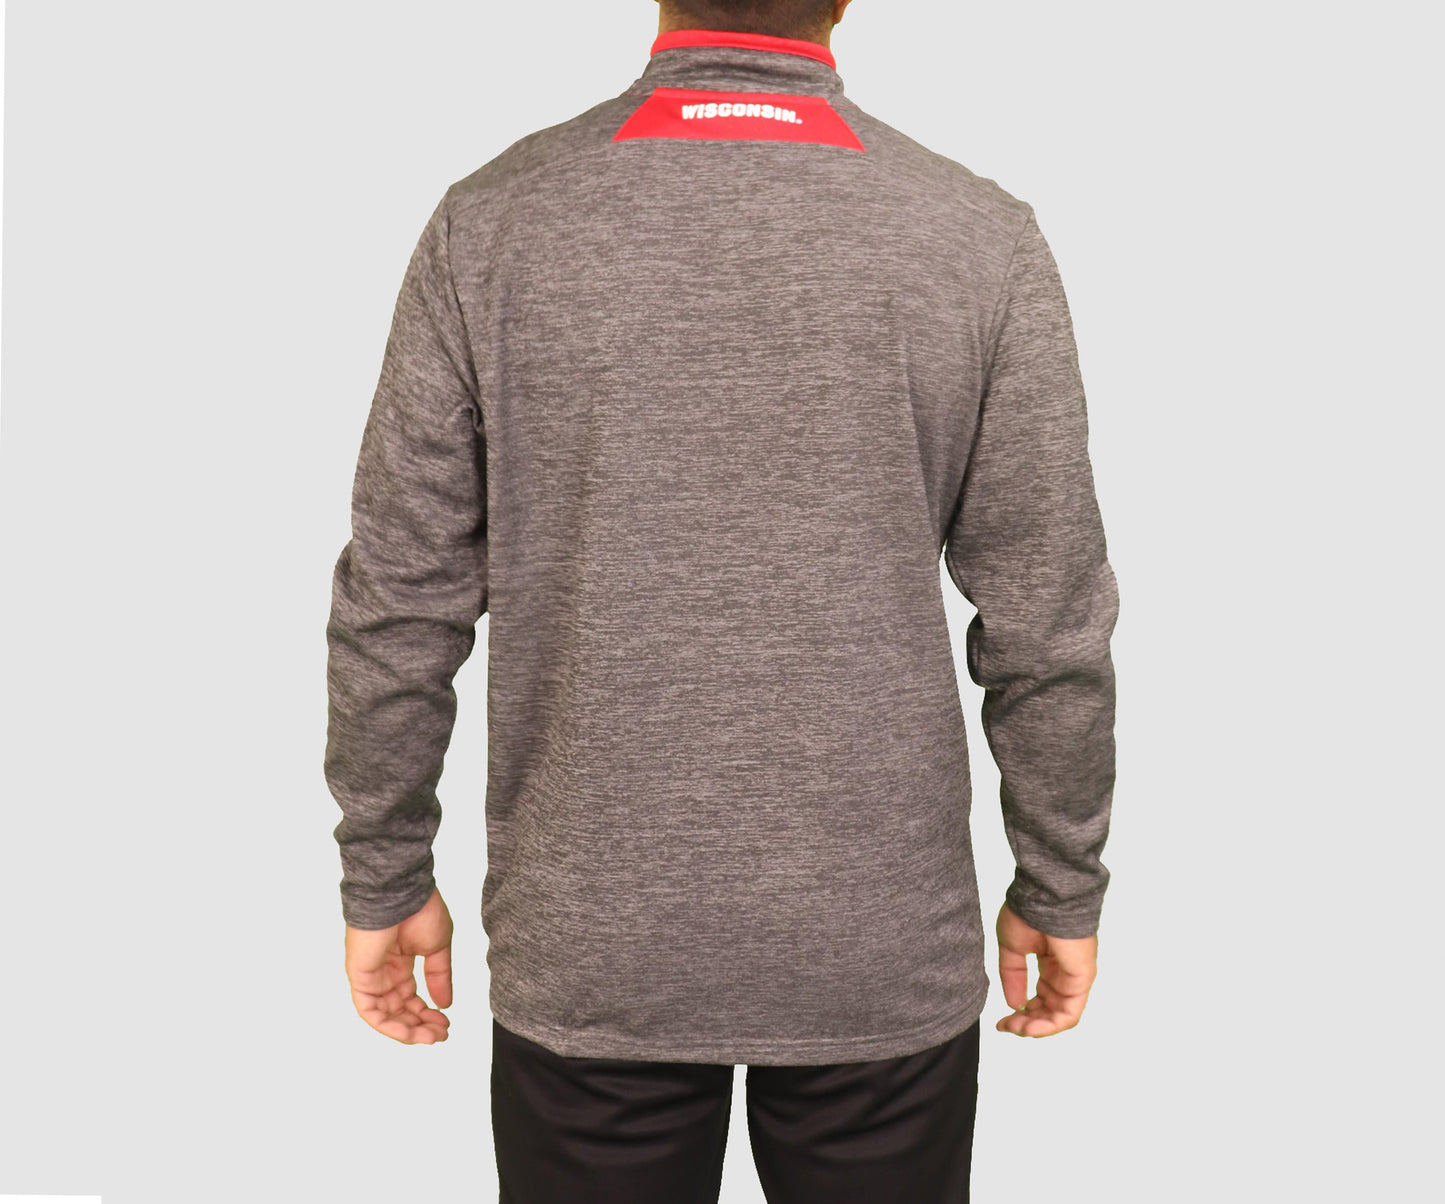 COLOSSEUM Mens sports Medium / Grey COLOSSEUM - Long Sleeve Top